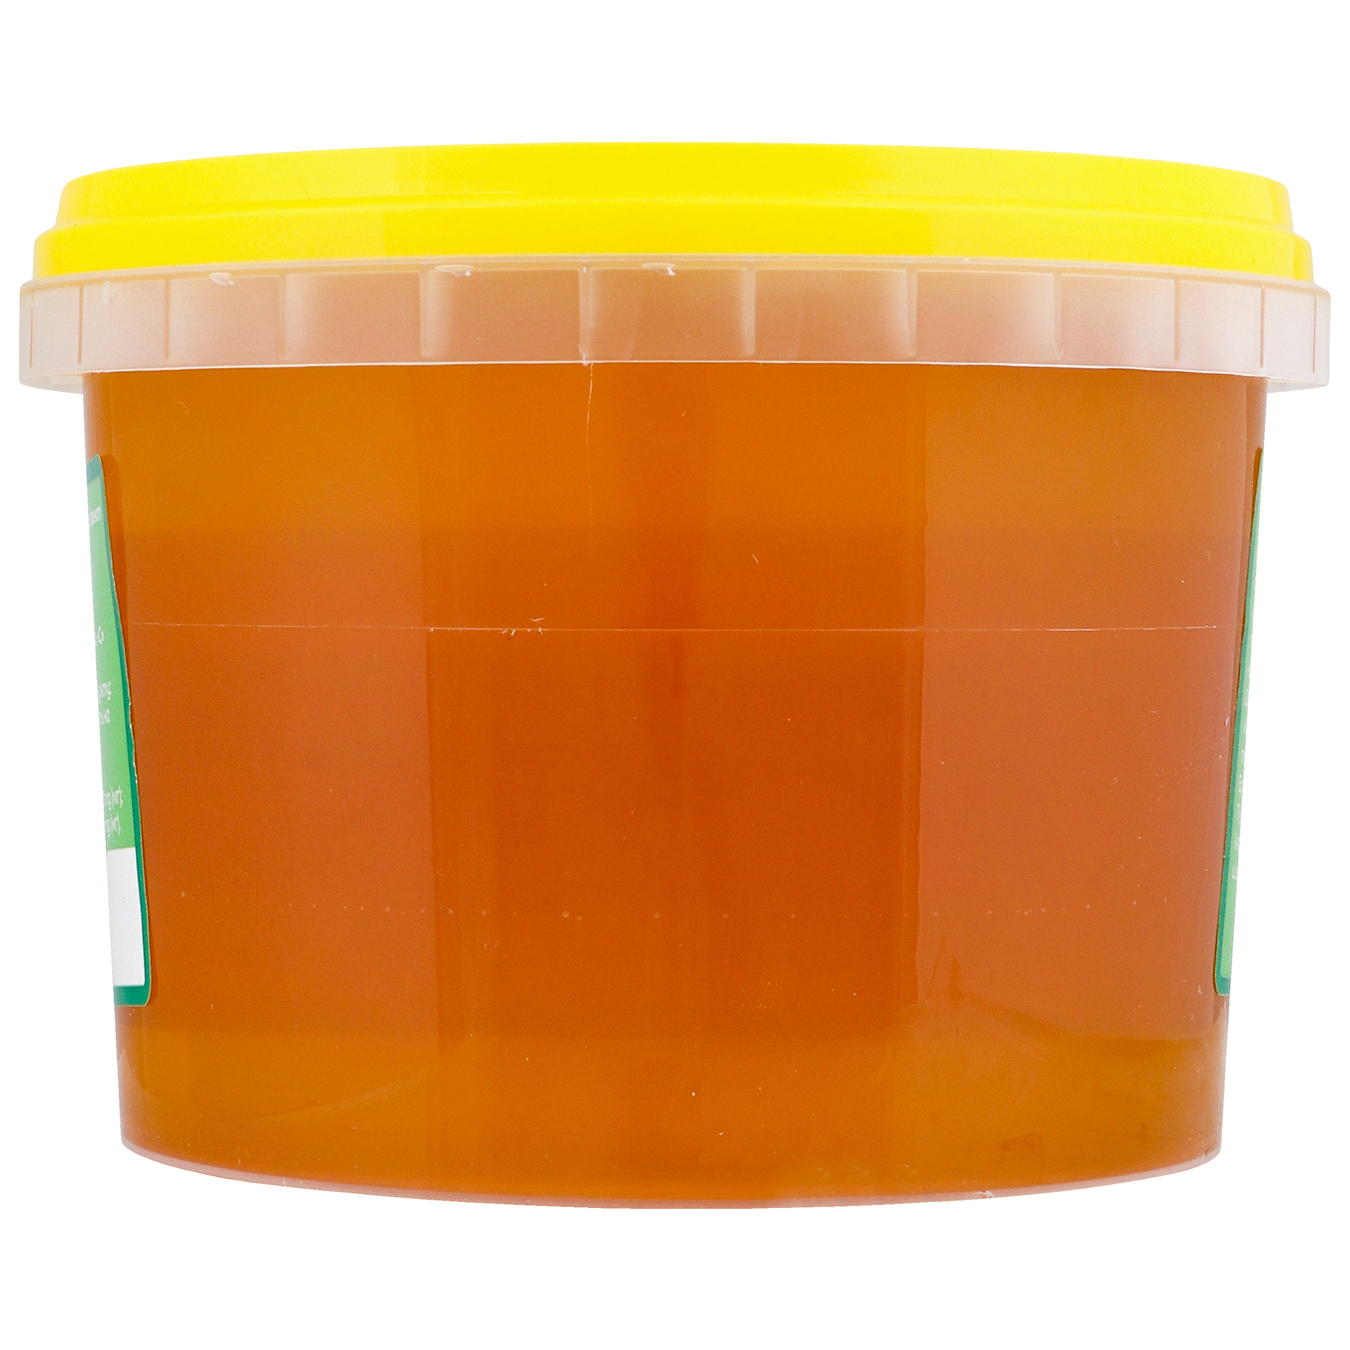 Natural multi-herb honey Apiary bucket 500g 3